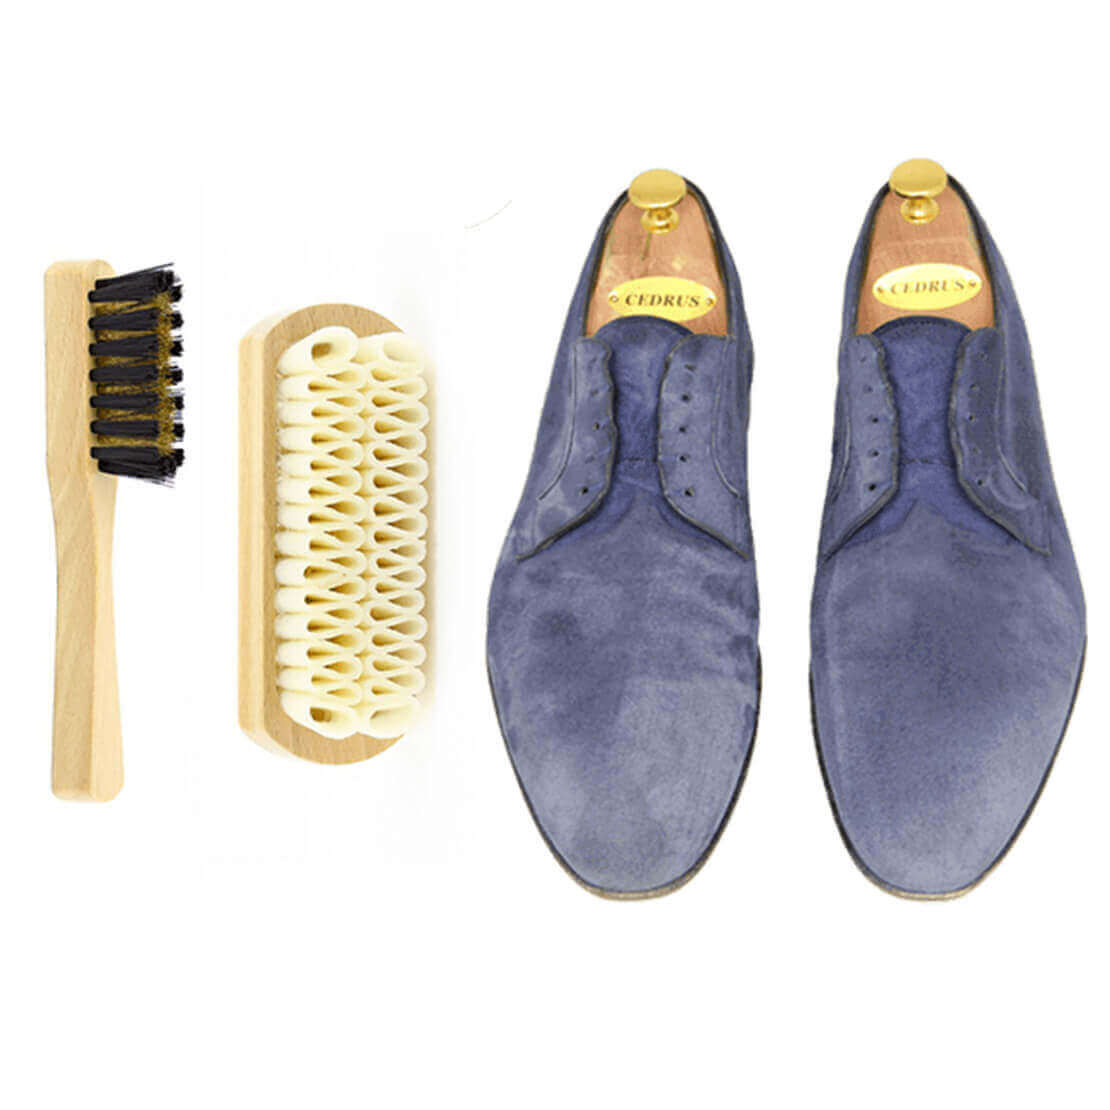 Kit de nettoyage de chaussures en daim. Suede Brush & Suede Eraser